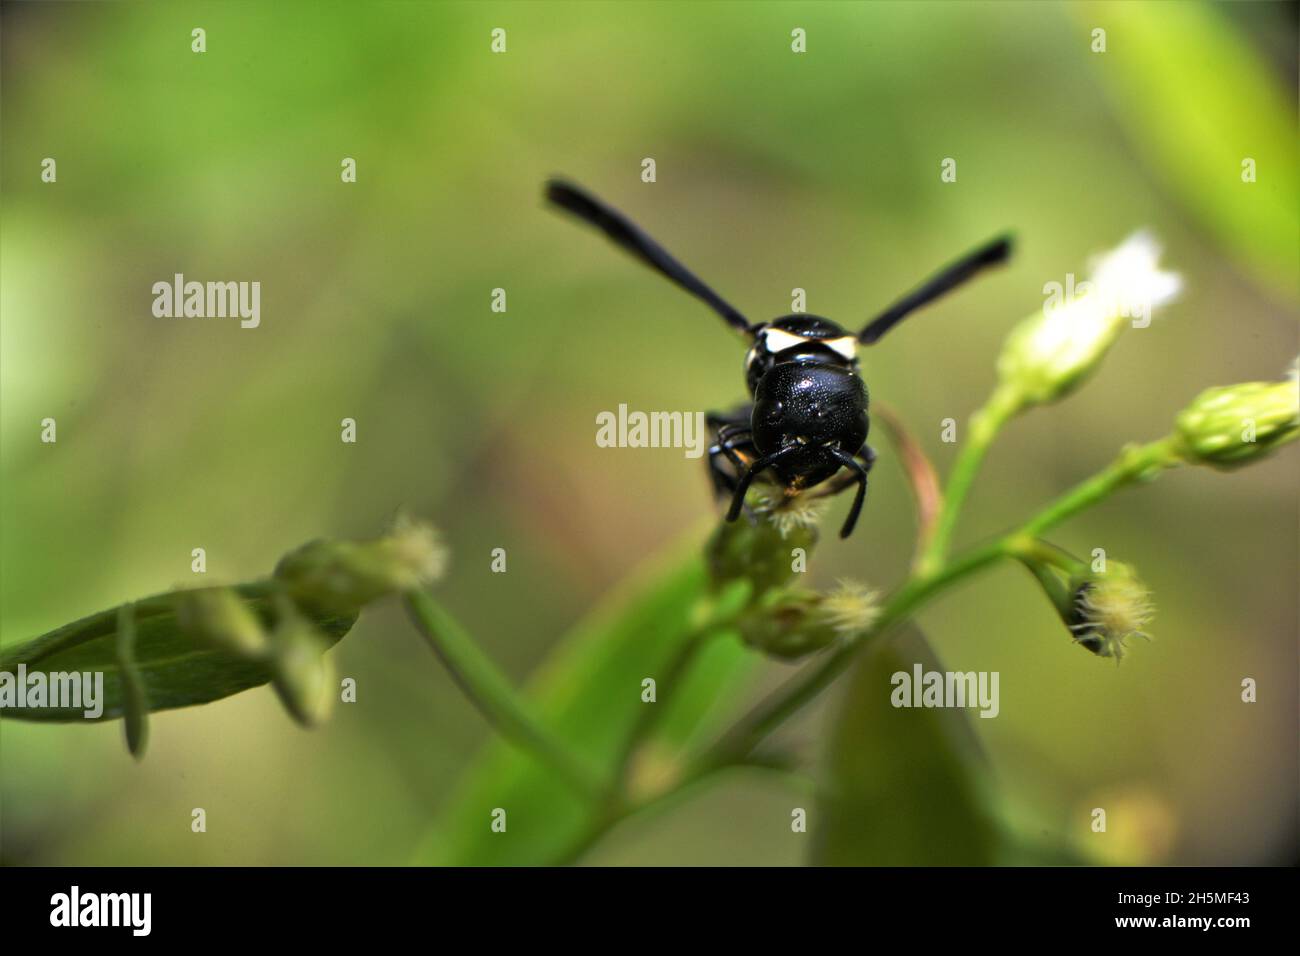 White stripped black wasp. Stock Photo